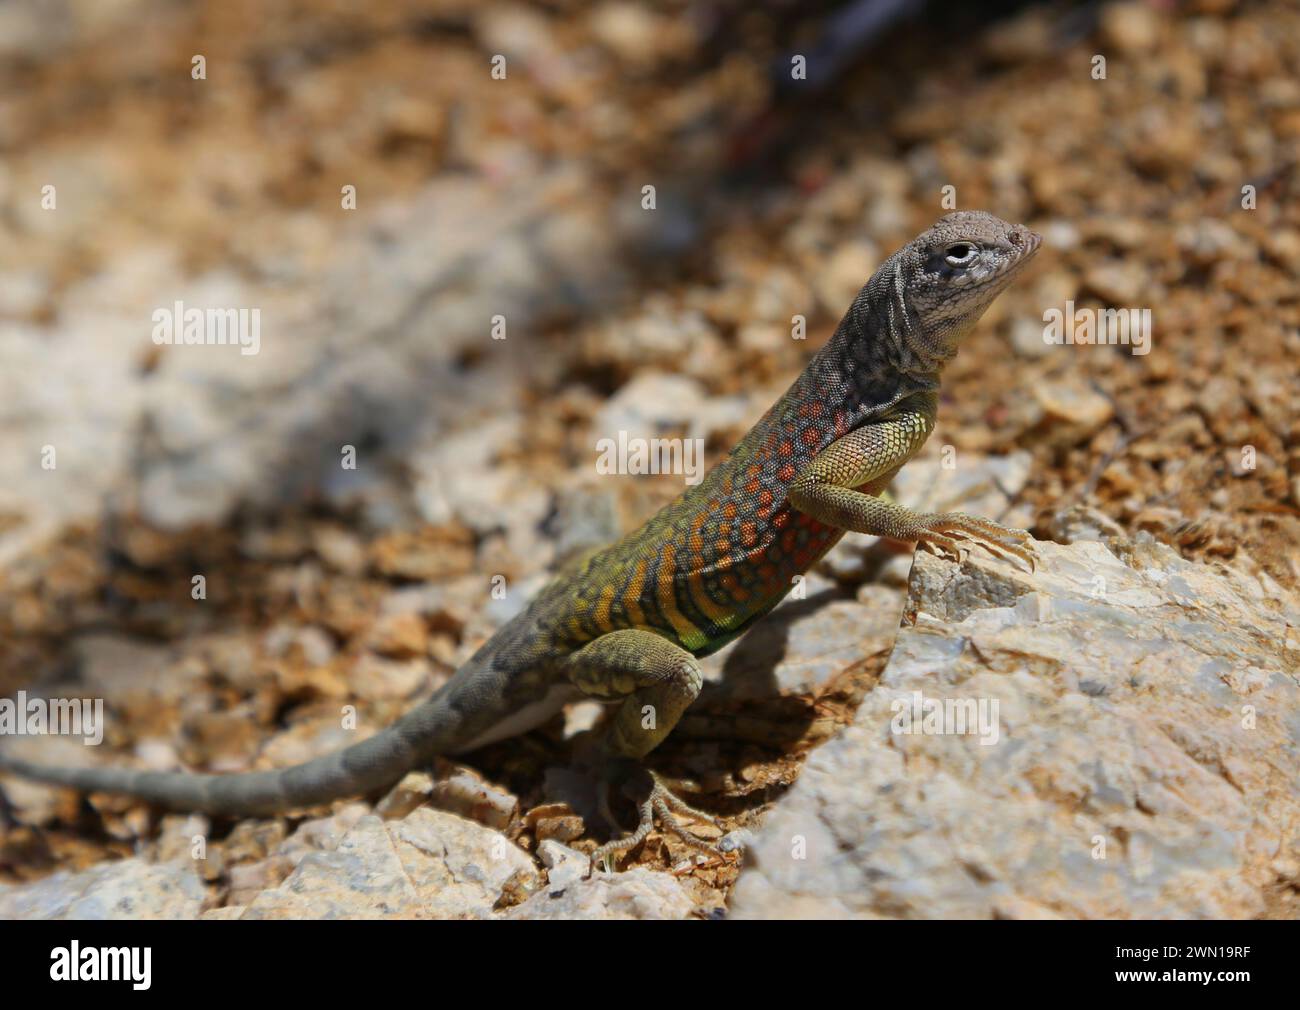 A Greater Earless Lizard (Cophosaurus texanus) sitting on a rock.  Shot just outside of Tucson, Arizona. Stock Photo